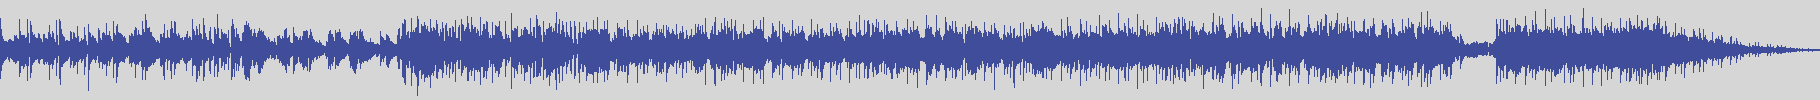 digiphonic_records [DPR002] Nino D'Angelo - Povera Scema [Original Mix] audio wave form